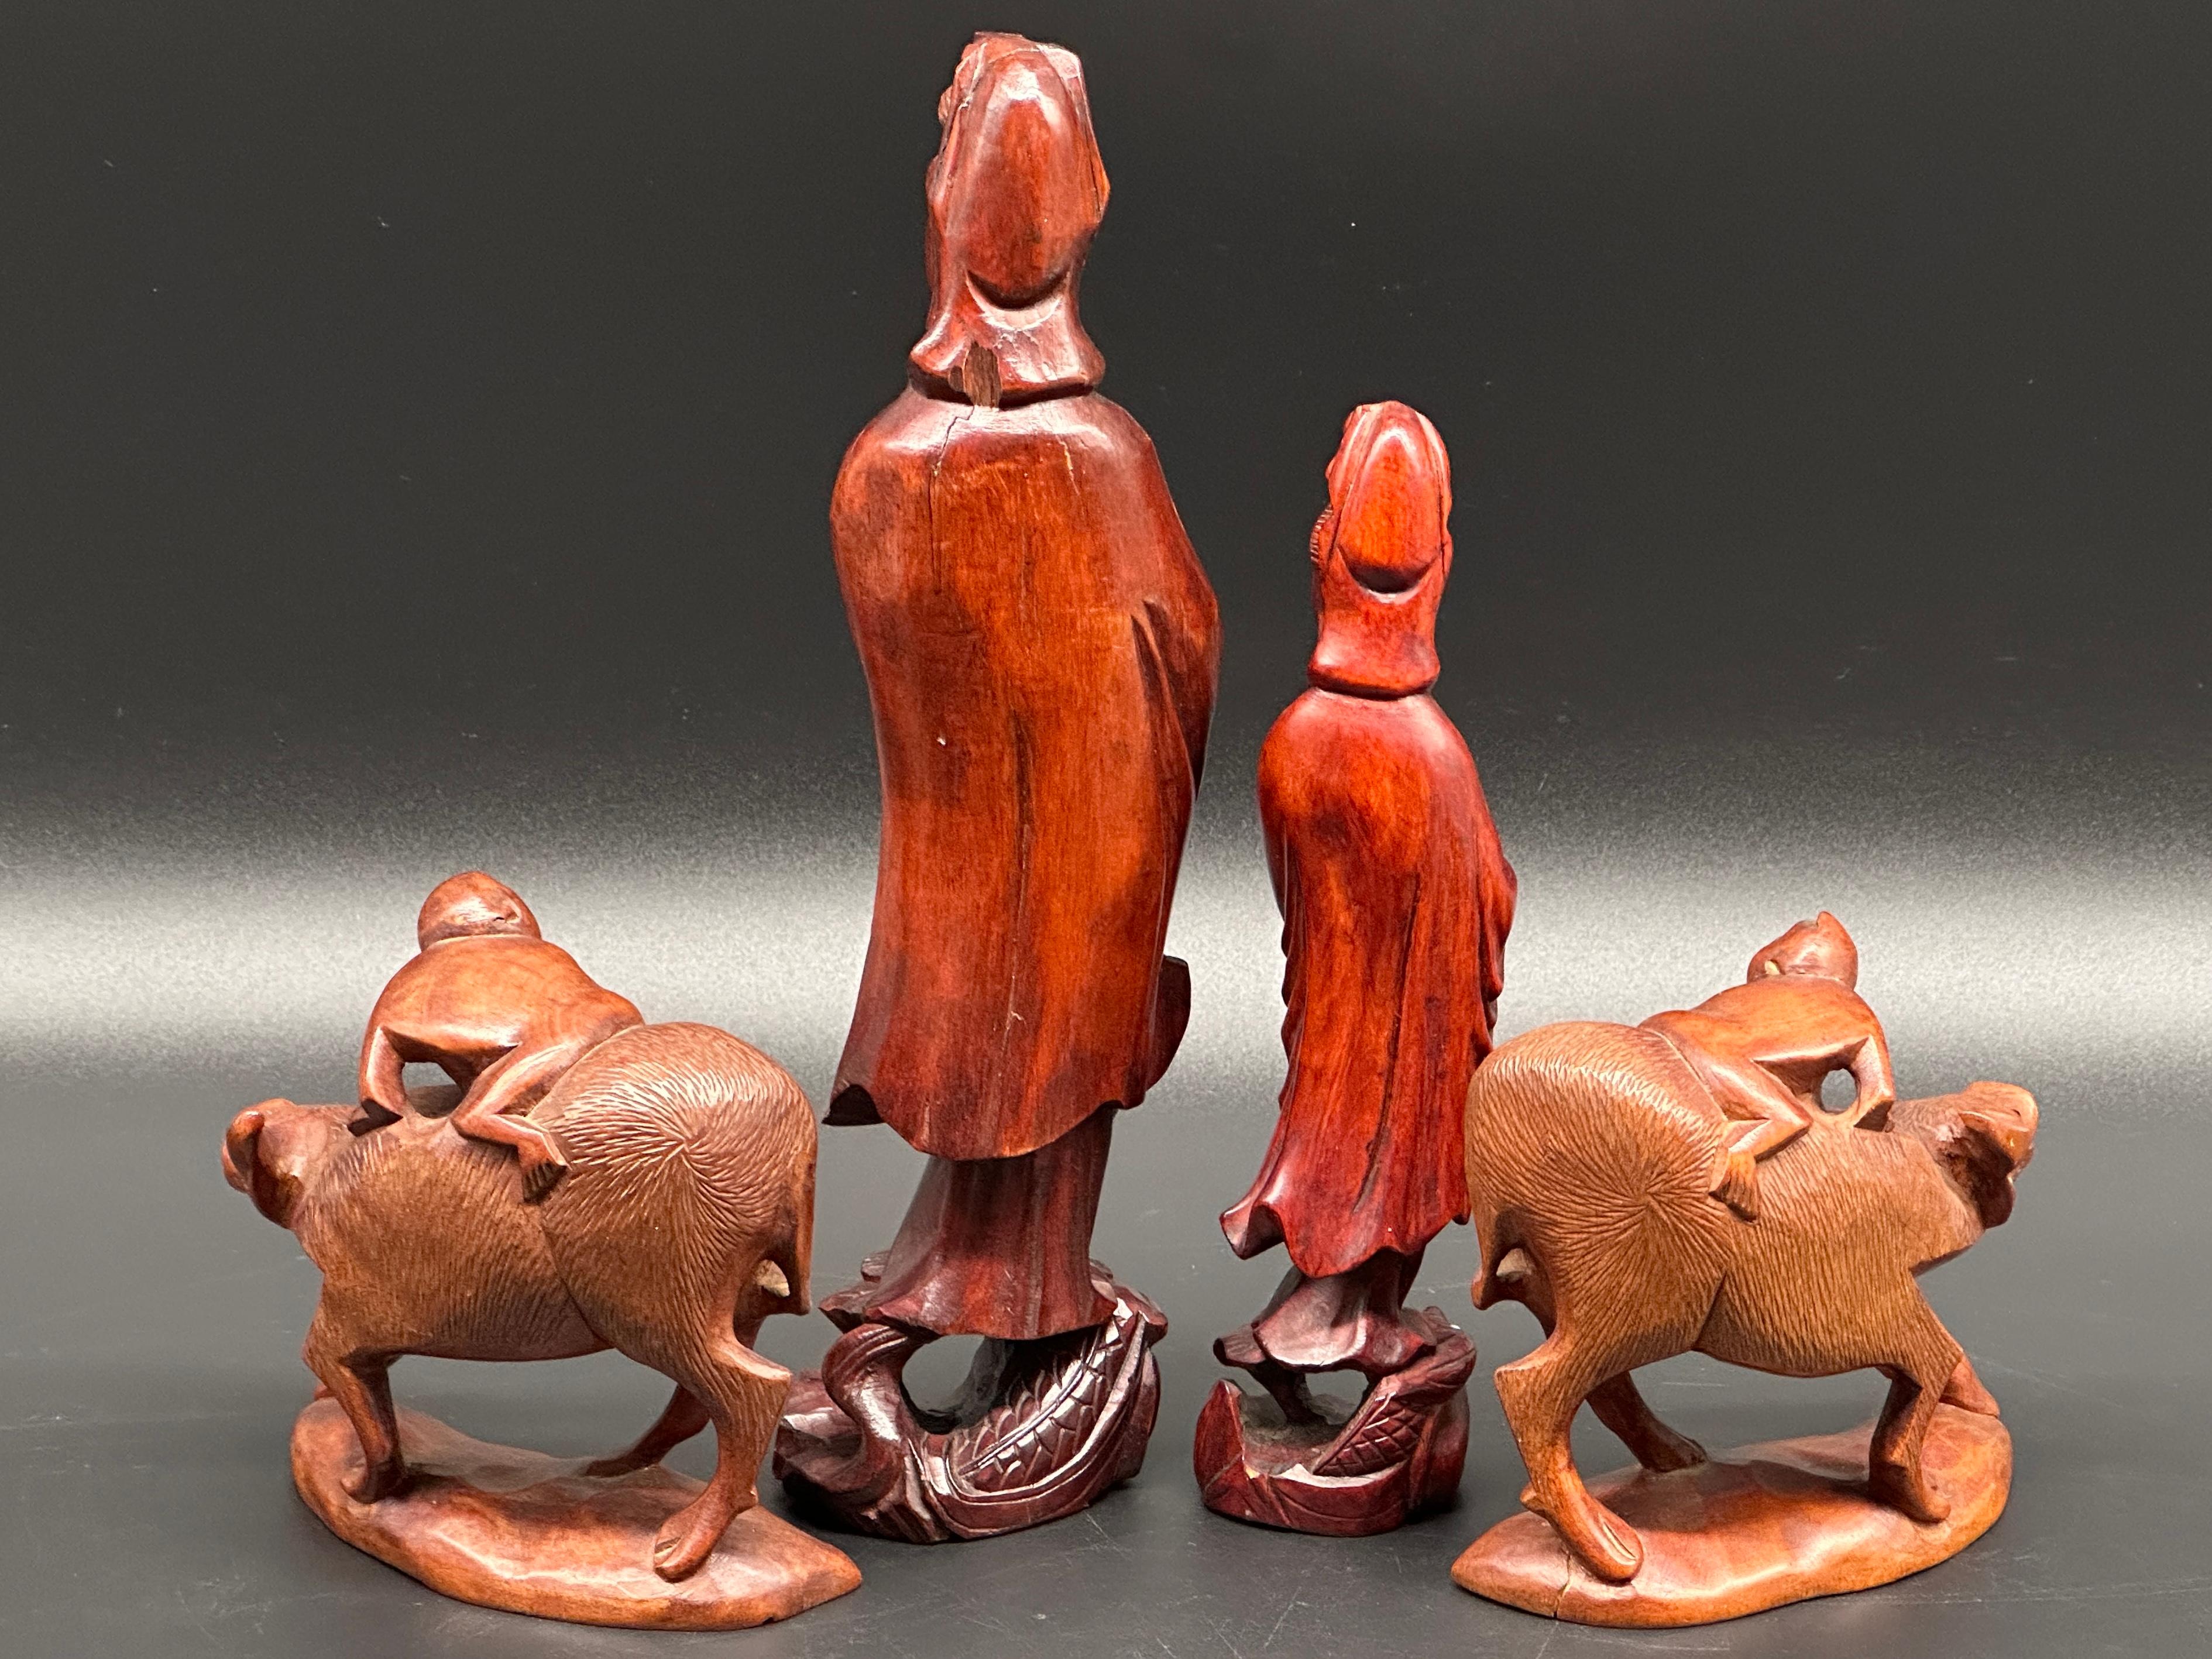 Hand Carved Wood Sculptures